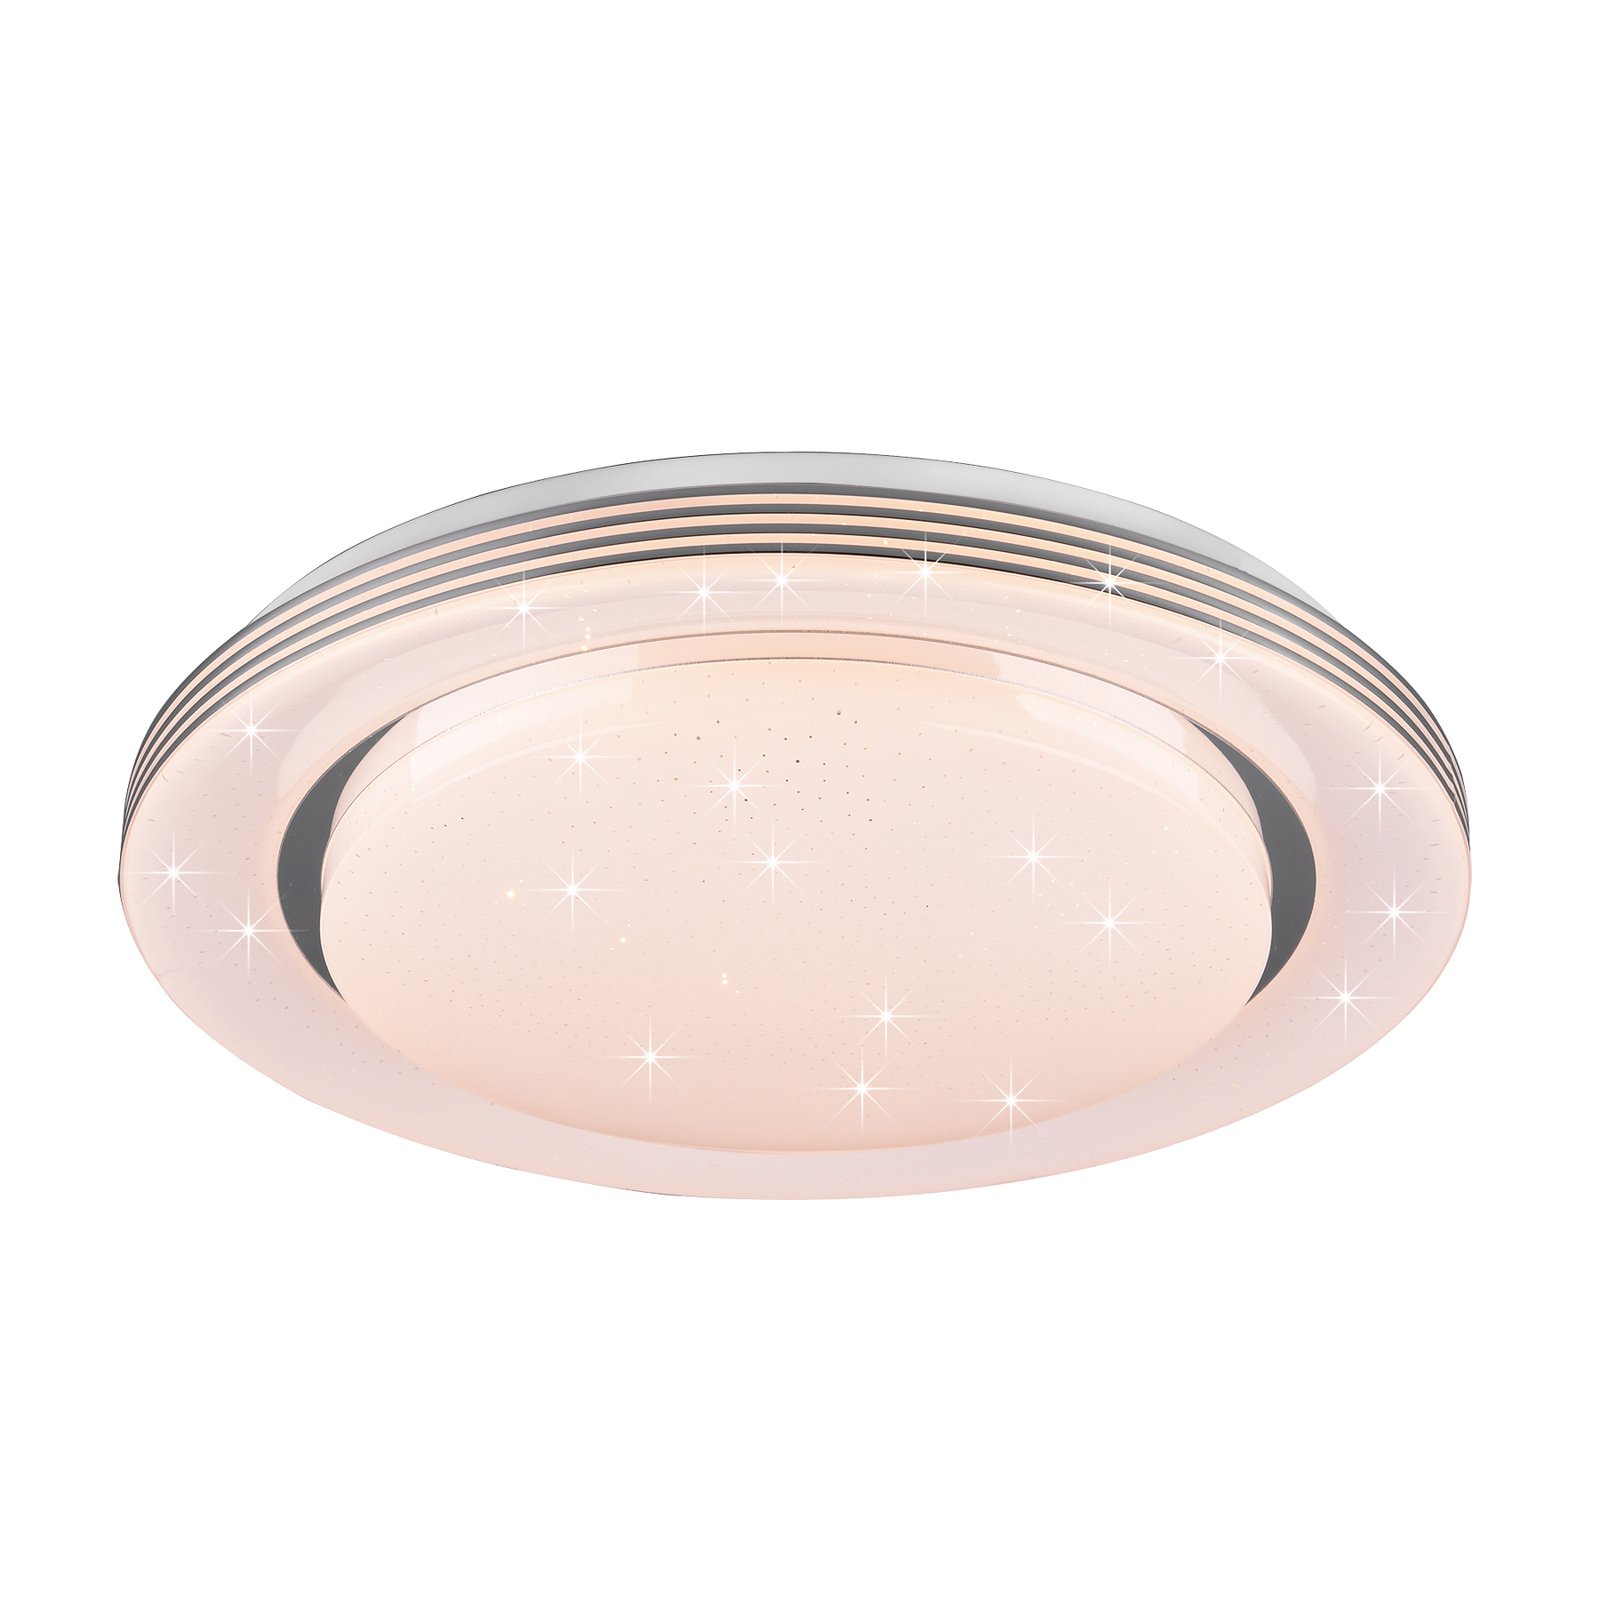 LED-Deckenlampe Atria, Ø 48 cm, weiß, Kunststoff, CCT